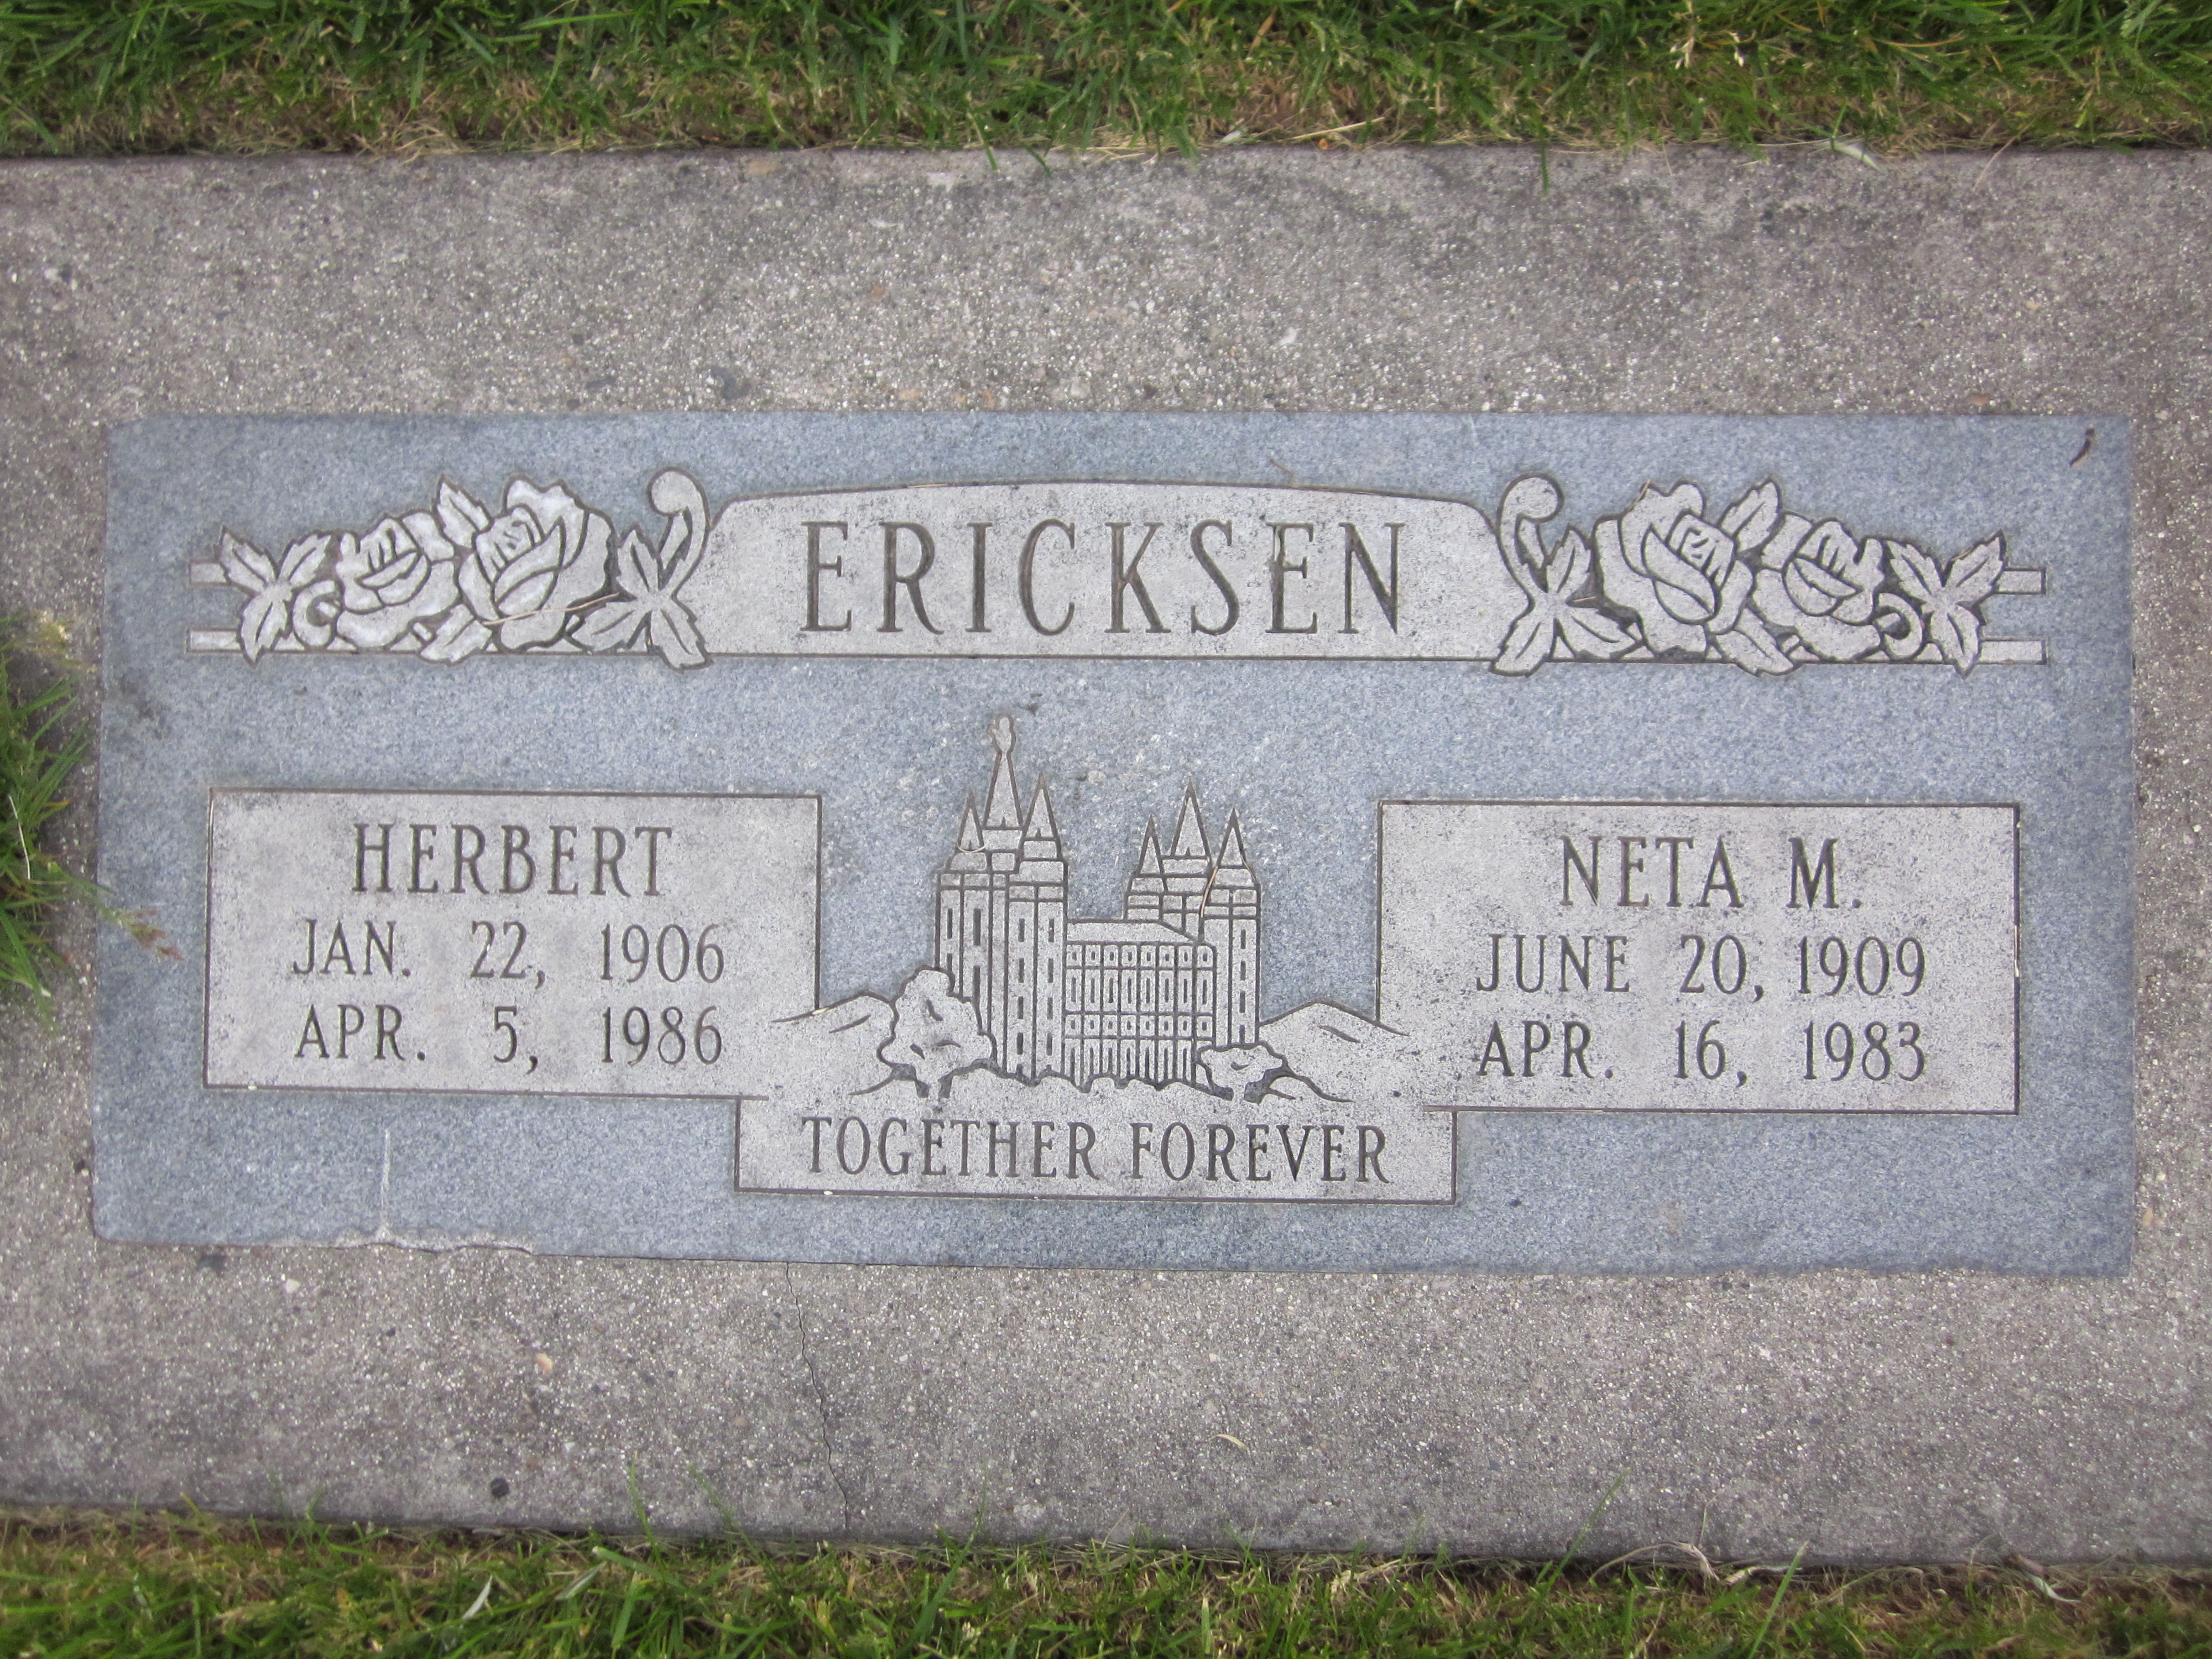 Herbert Ericksen